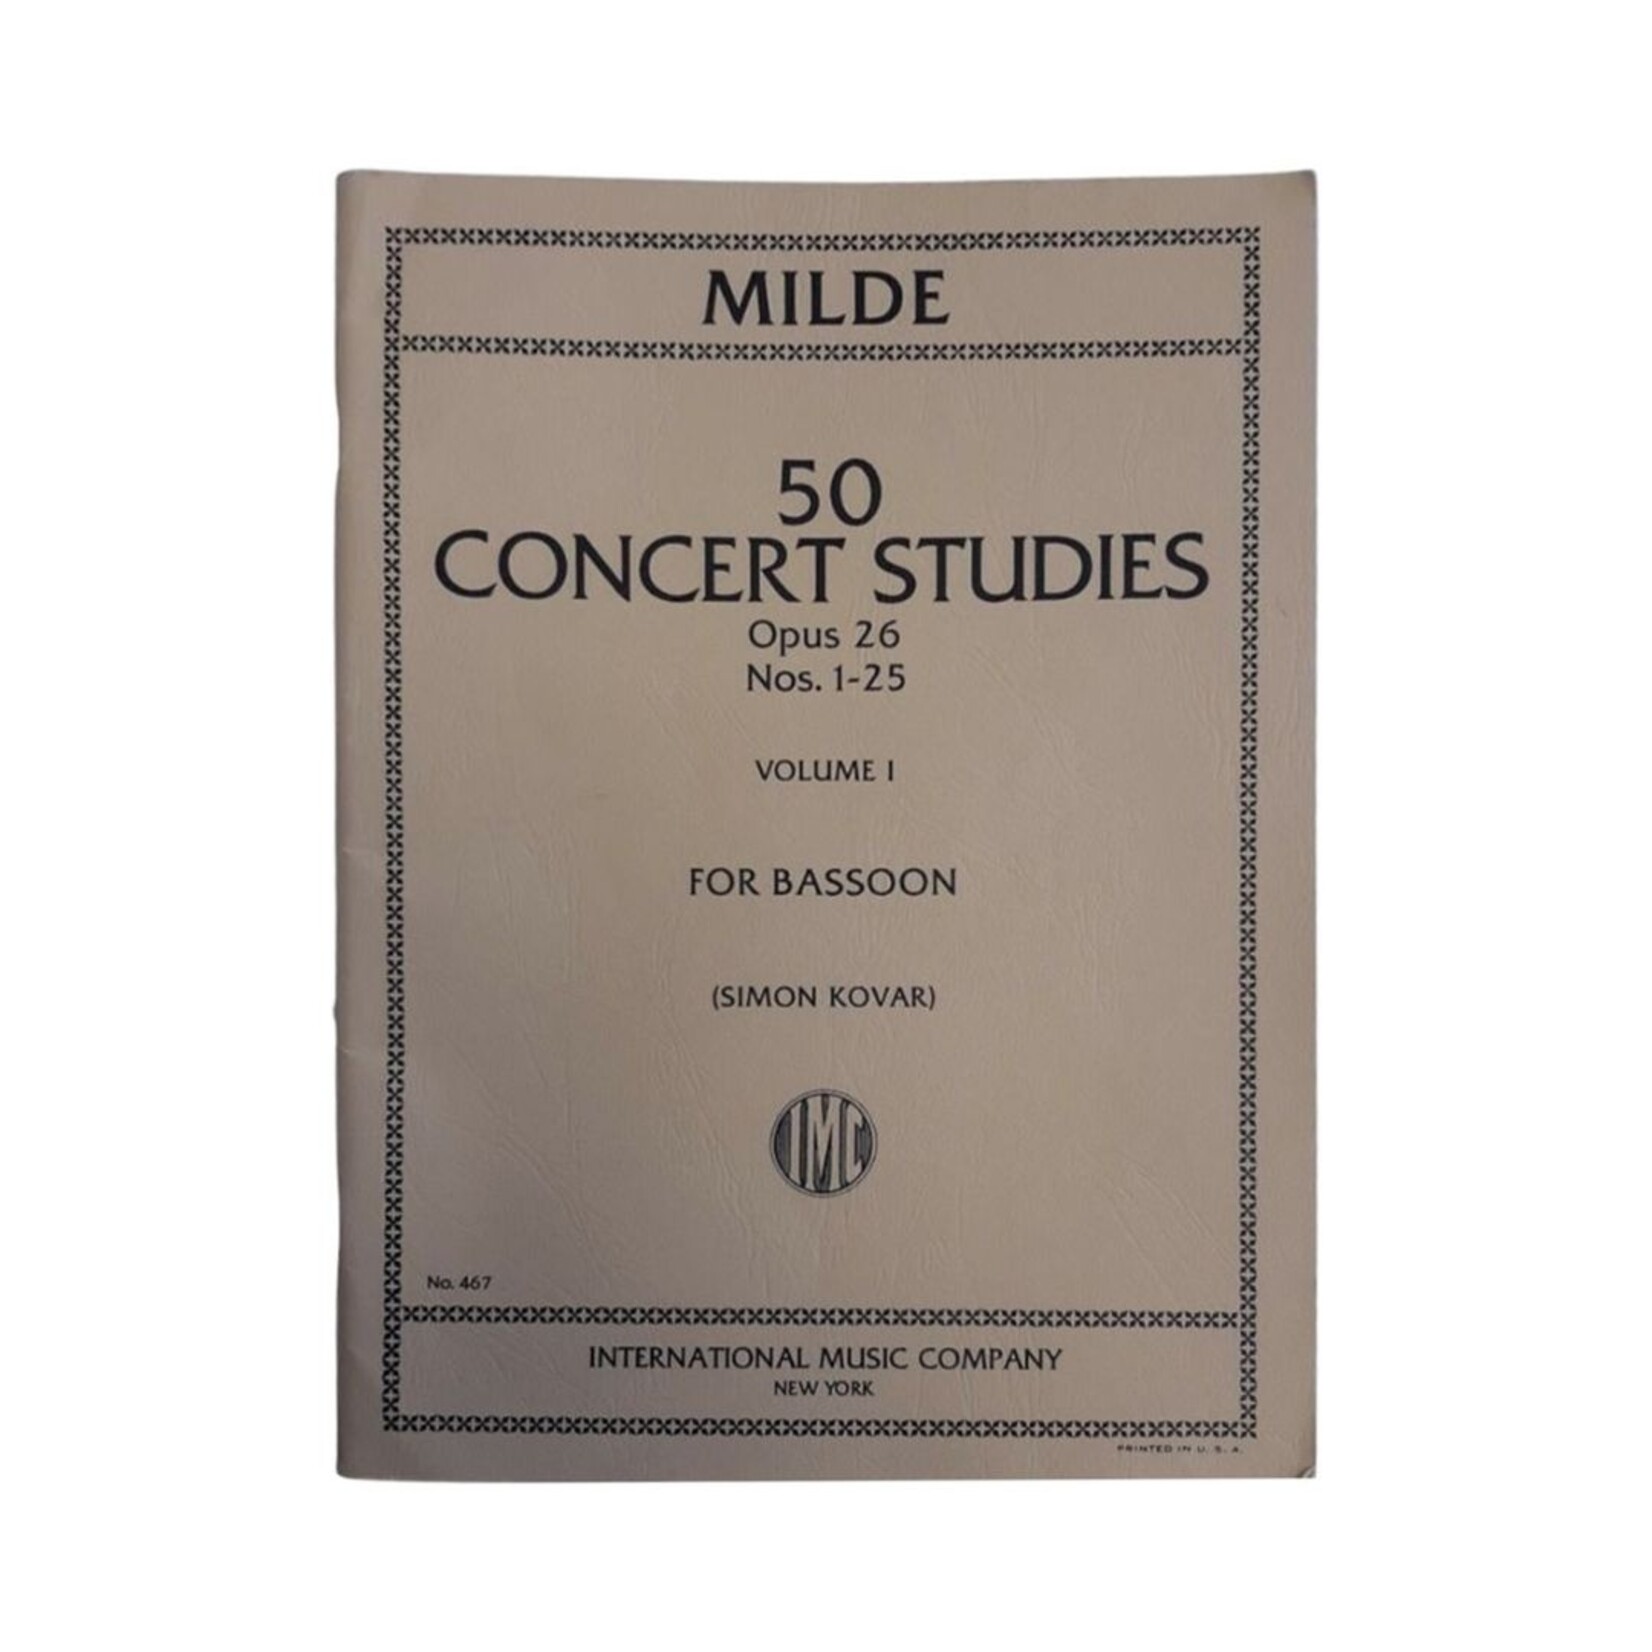 International Music Company 50 Concert Studies Vol. I, Op.26 Nos. 1-25, by Milde - International Music Company